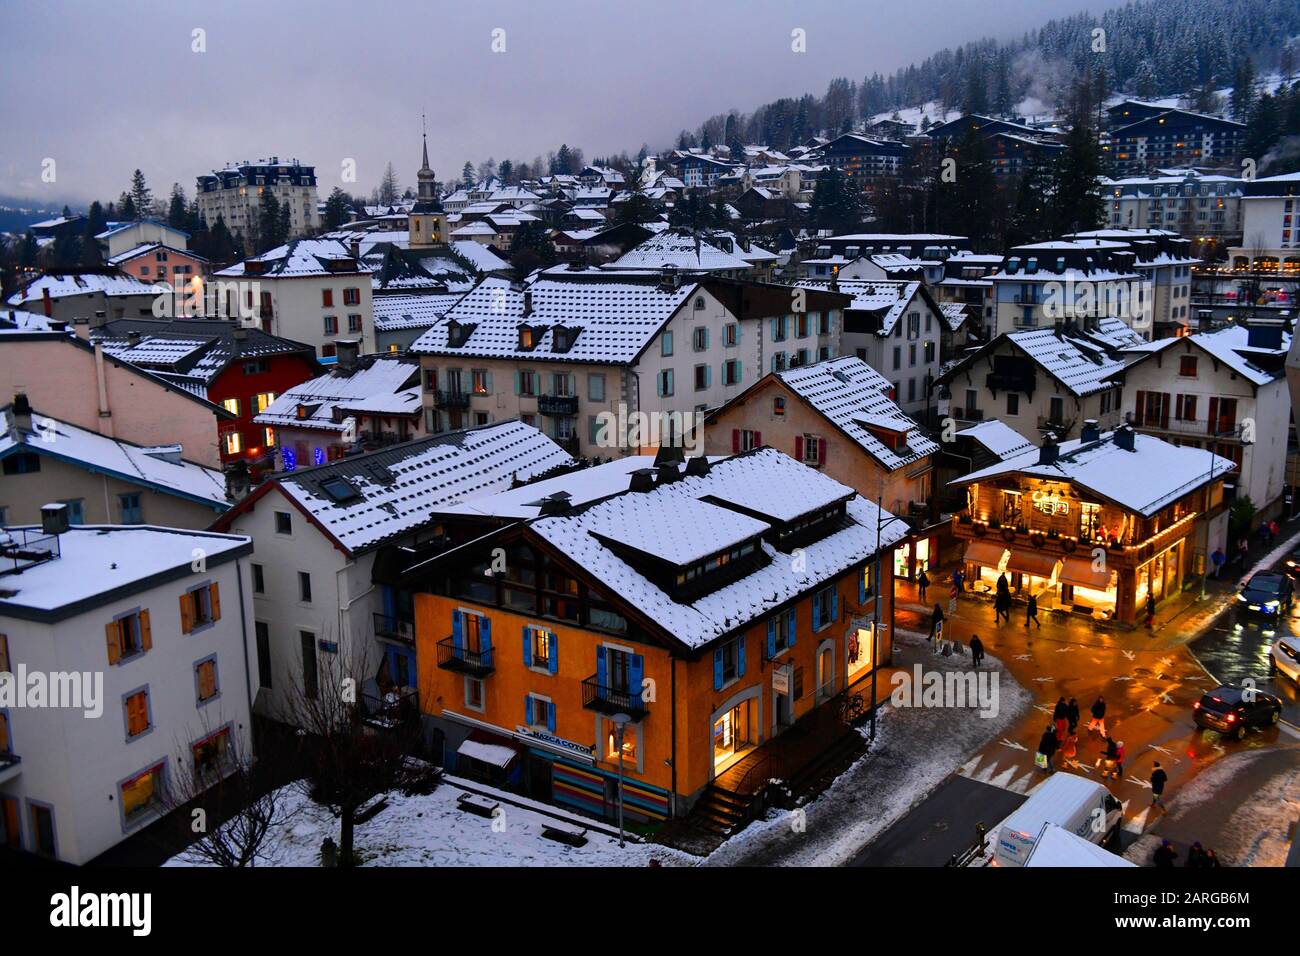 Chamonix,Haute-Savoie,French Alps,France,Europe. Stock Photo